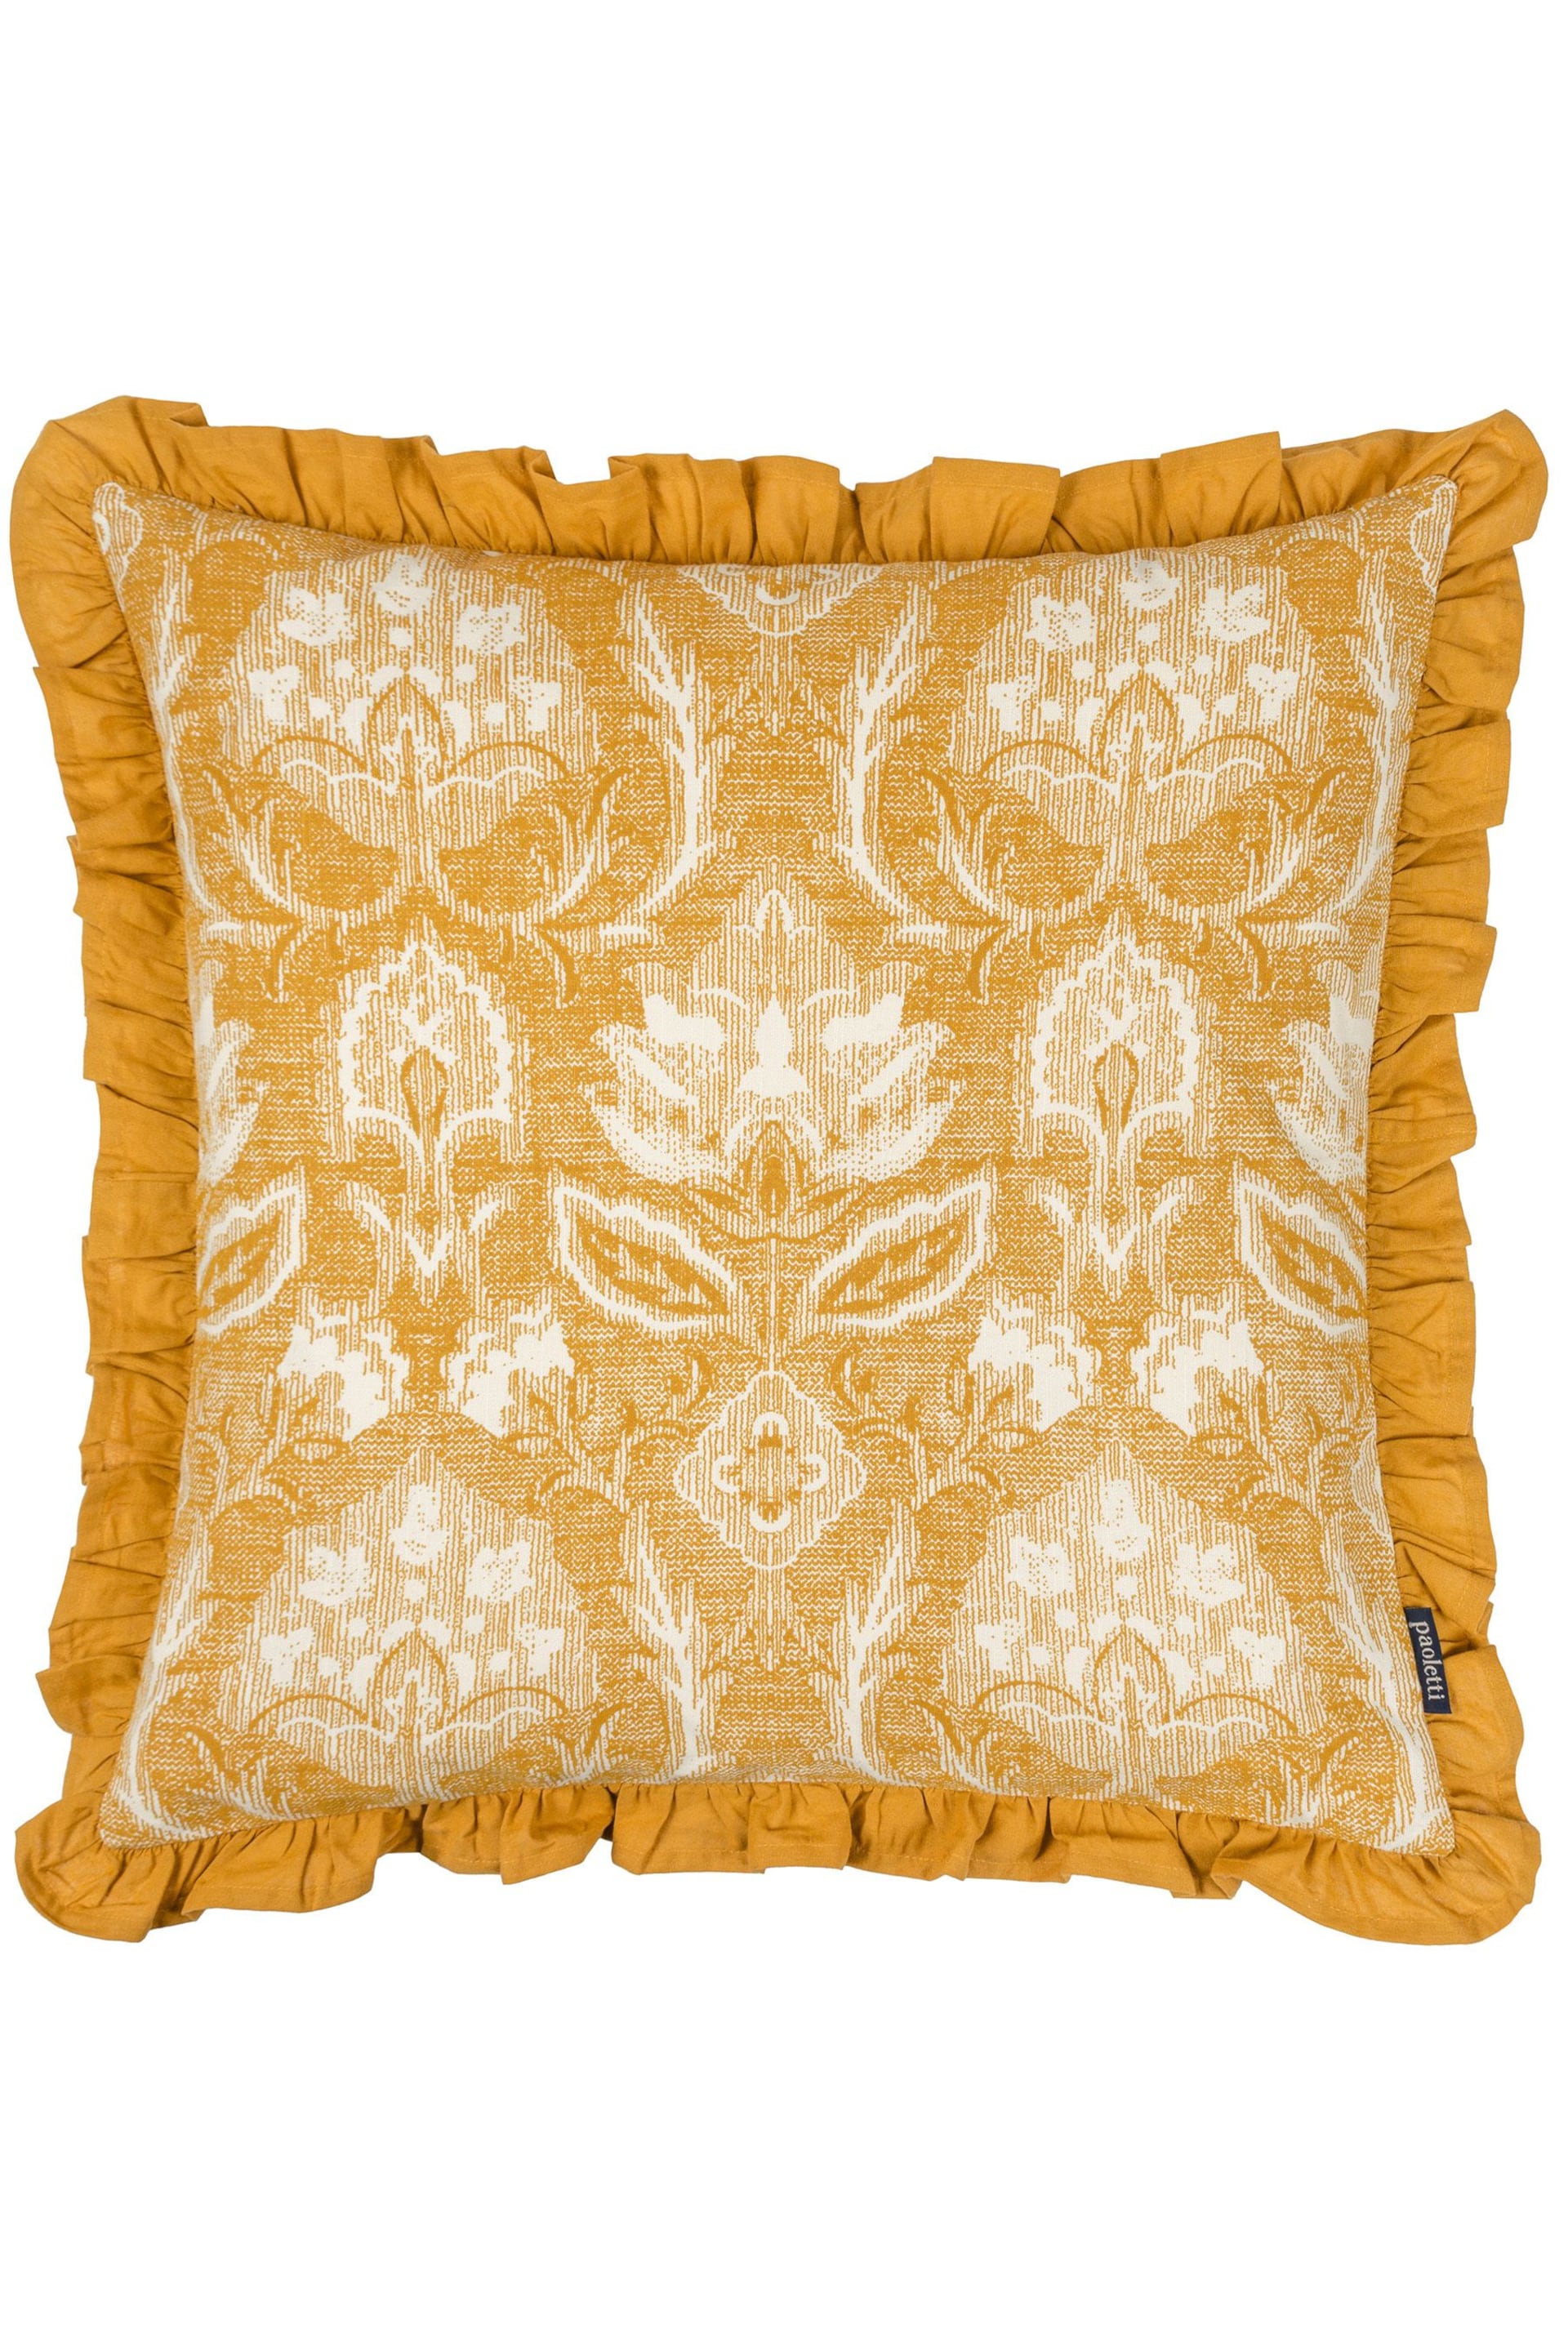 Riva Paoletti Ochre Yellow Kirkton Floral Tile Cotton Pleated Cushion - Image 3 of 7